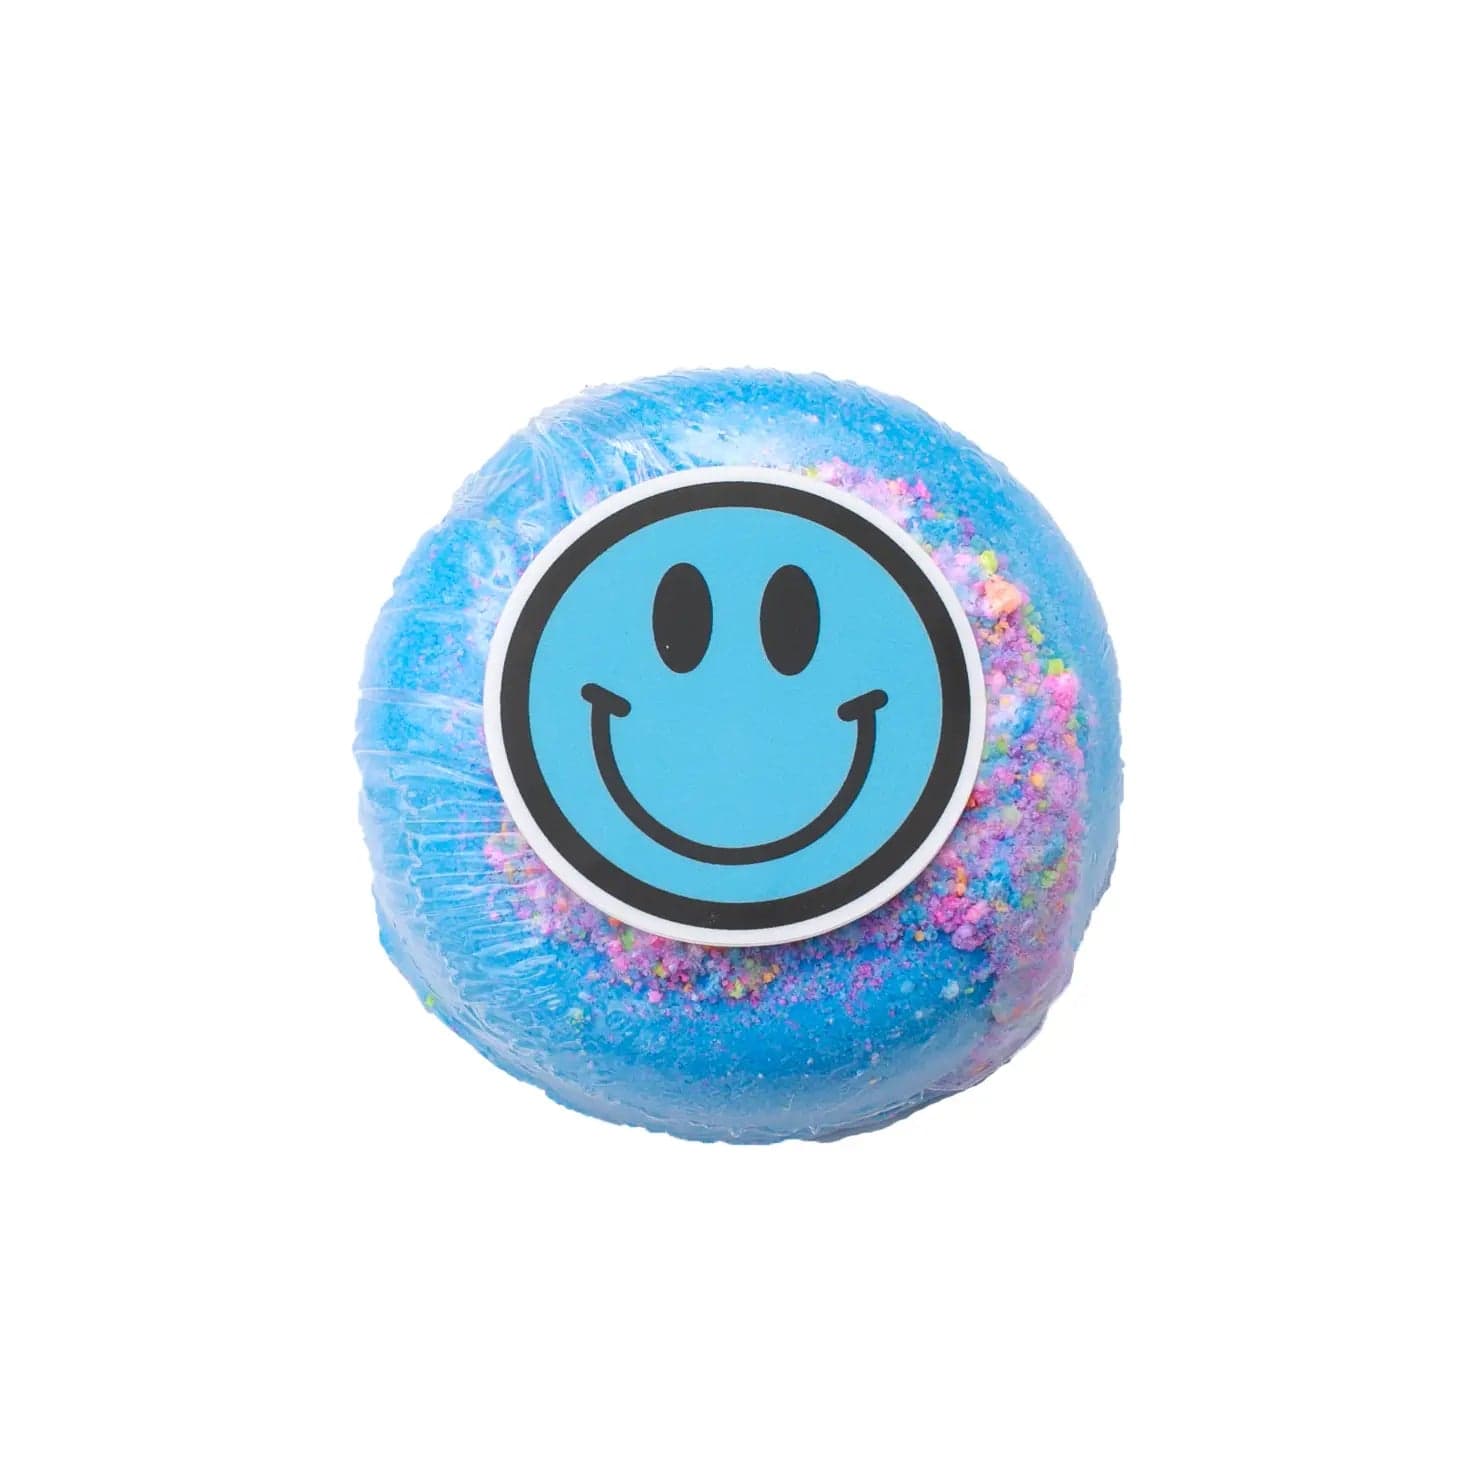 Blue Preppy Donut Bath Bomb & Sticker Pack garb2ART Cosmetics Lil Tulips